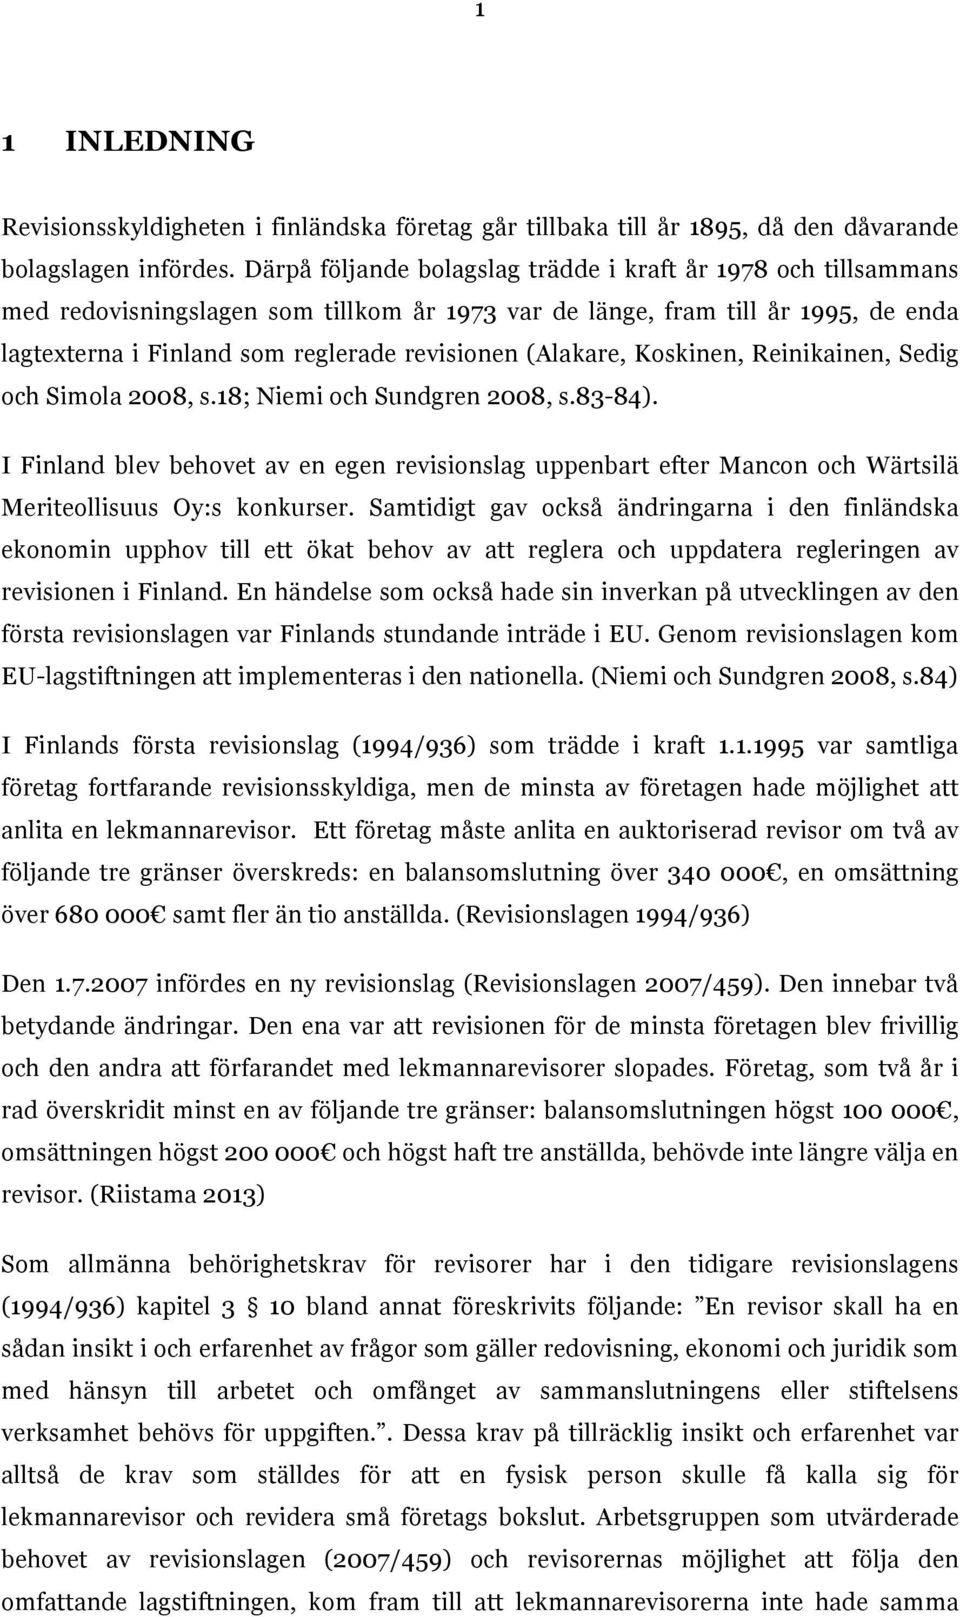 (Alakare, Koskinen, Reinikainen, Sedig och Simola 2008, s.18; Niemi och Sundgren 2008, s.83-84).